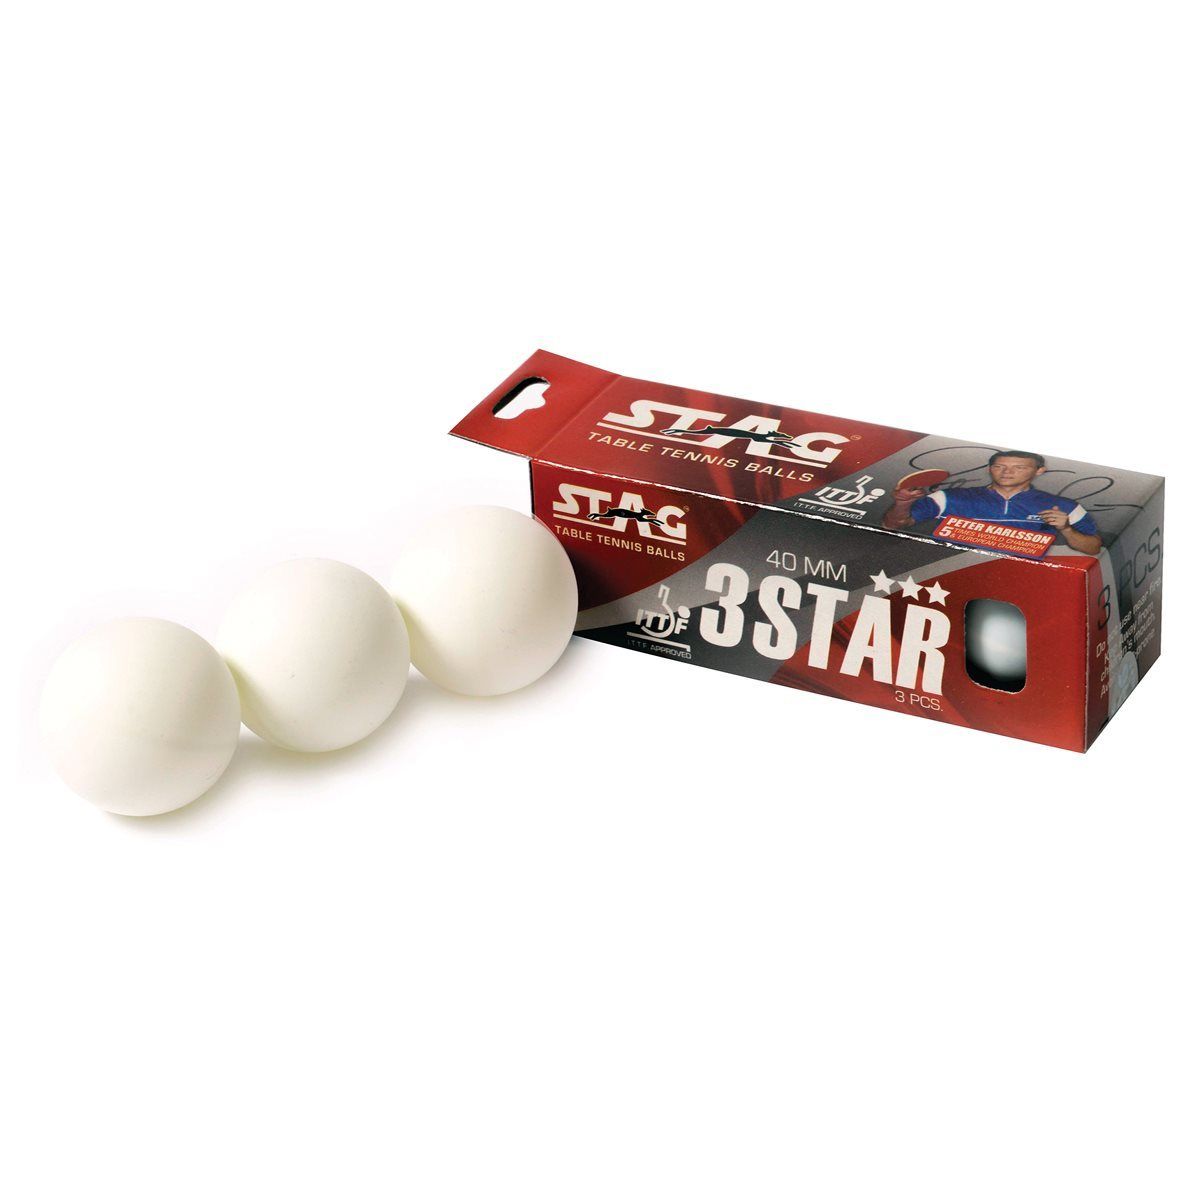 Stag 3-star Table Tennis Ball (6 balls)